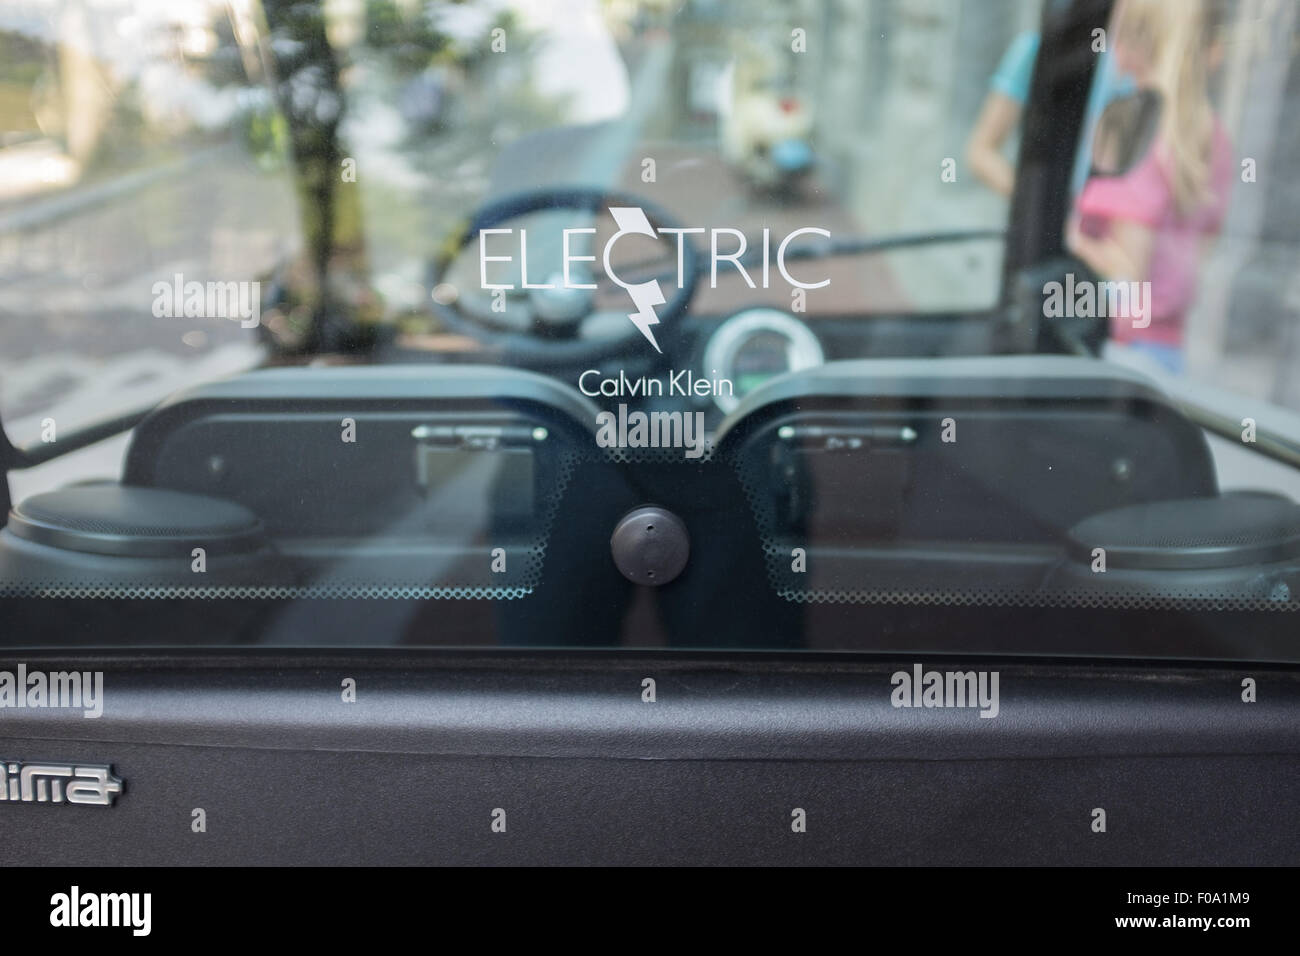 Electric Smart car with Calvin Klein branding Stock Photo